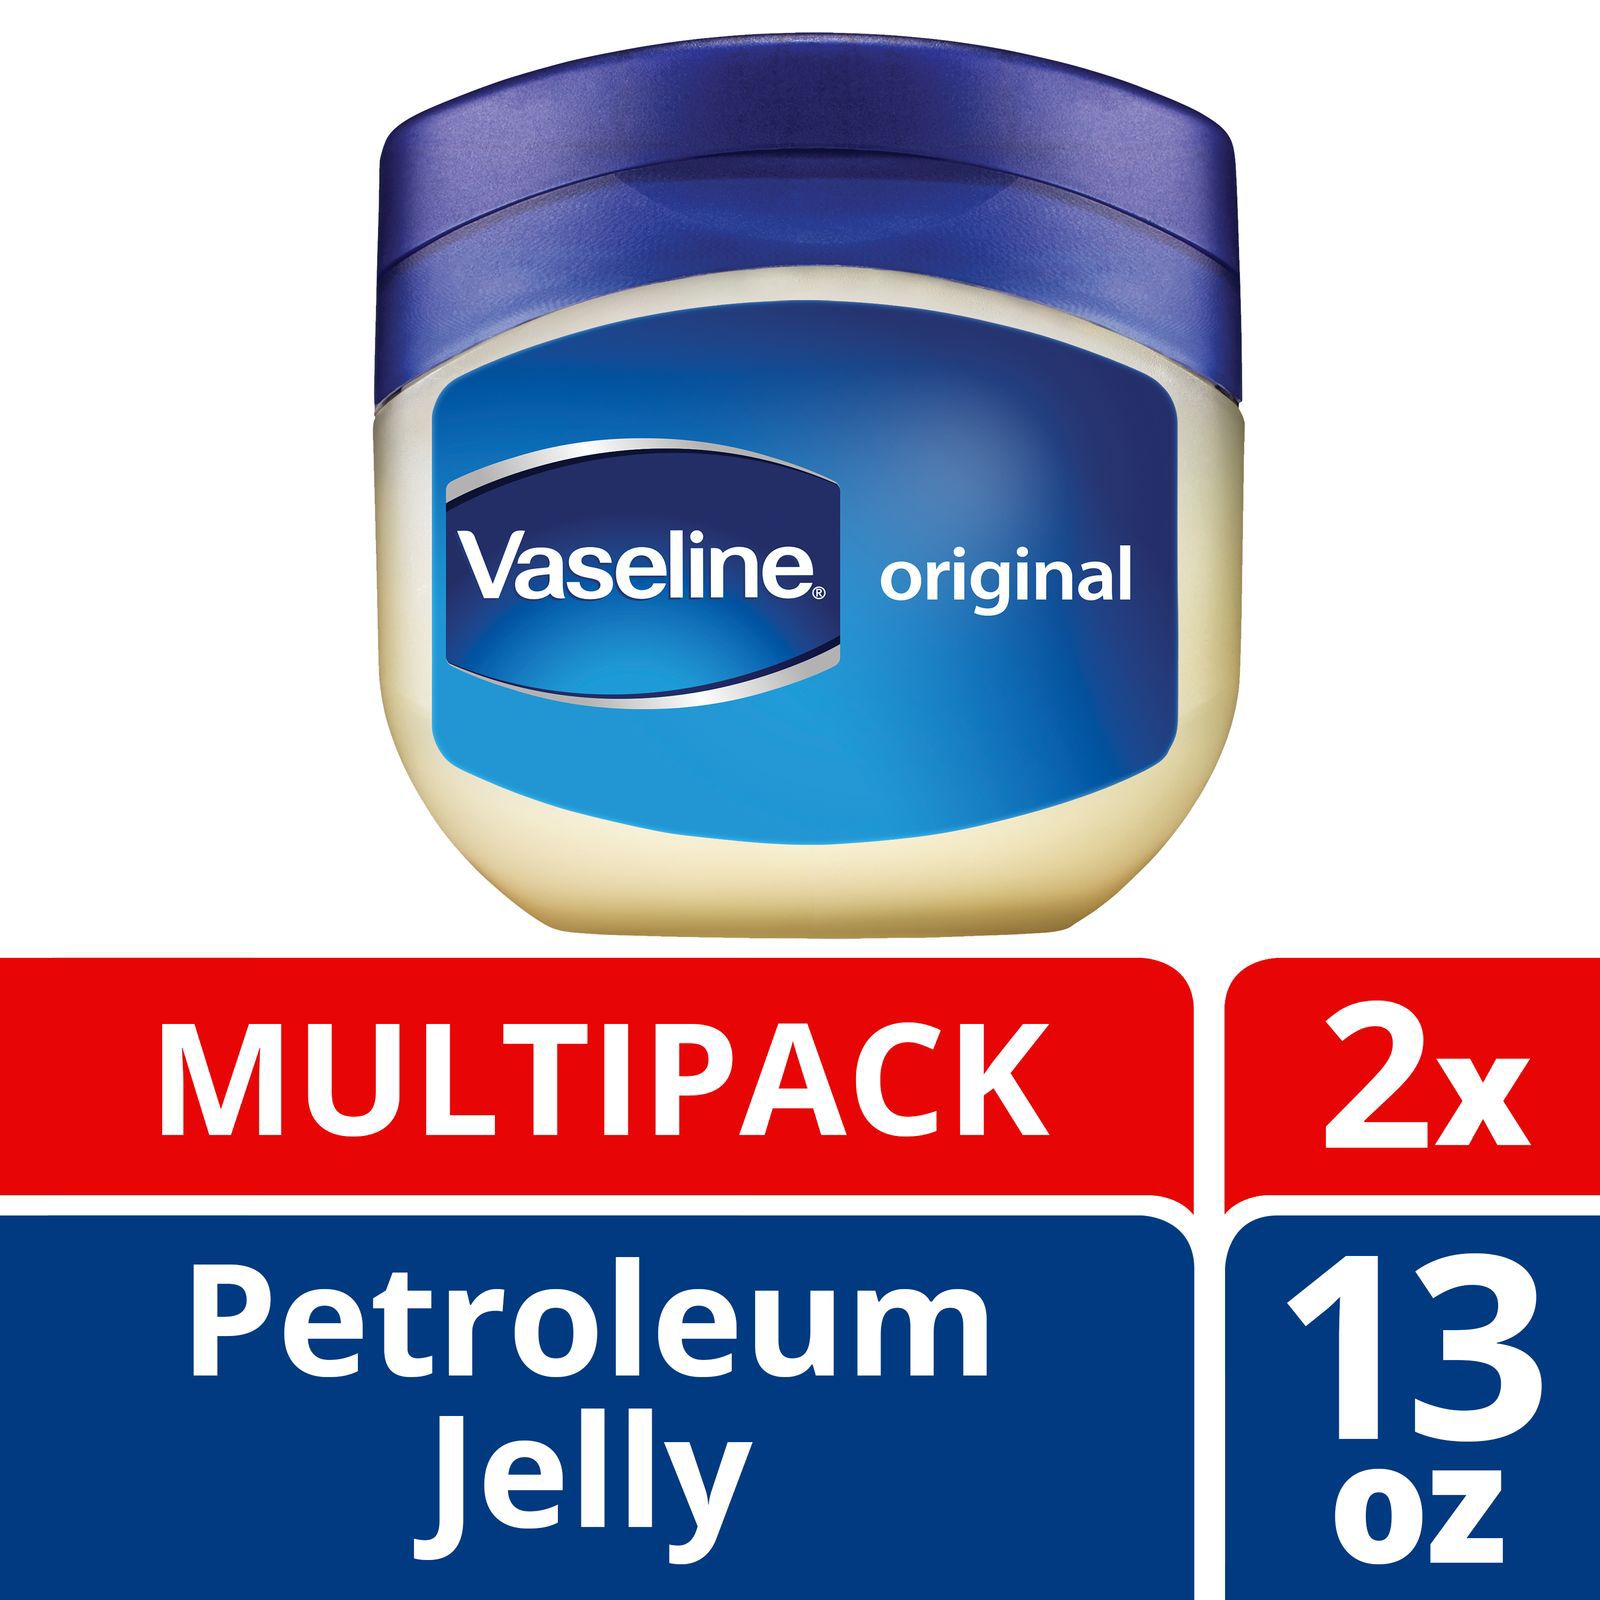 vaseline petroleum jelly